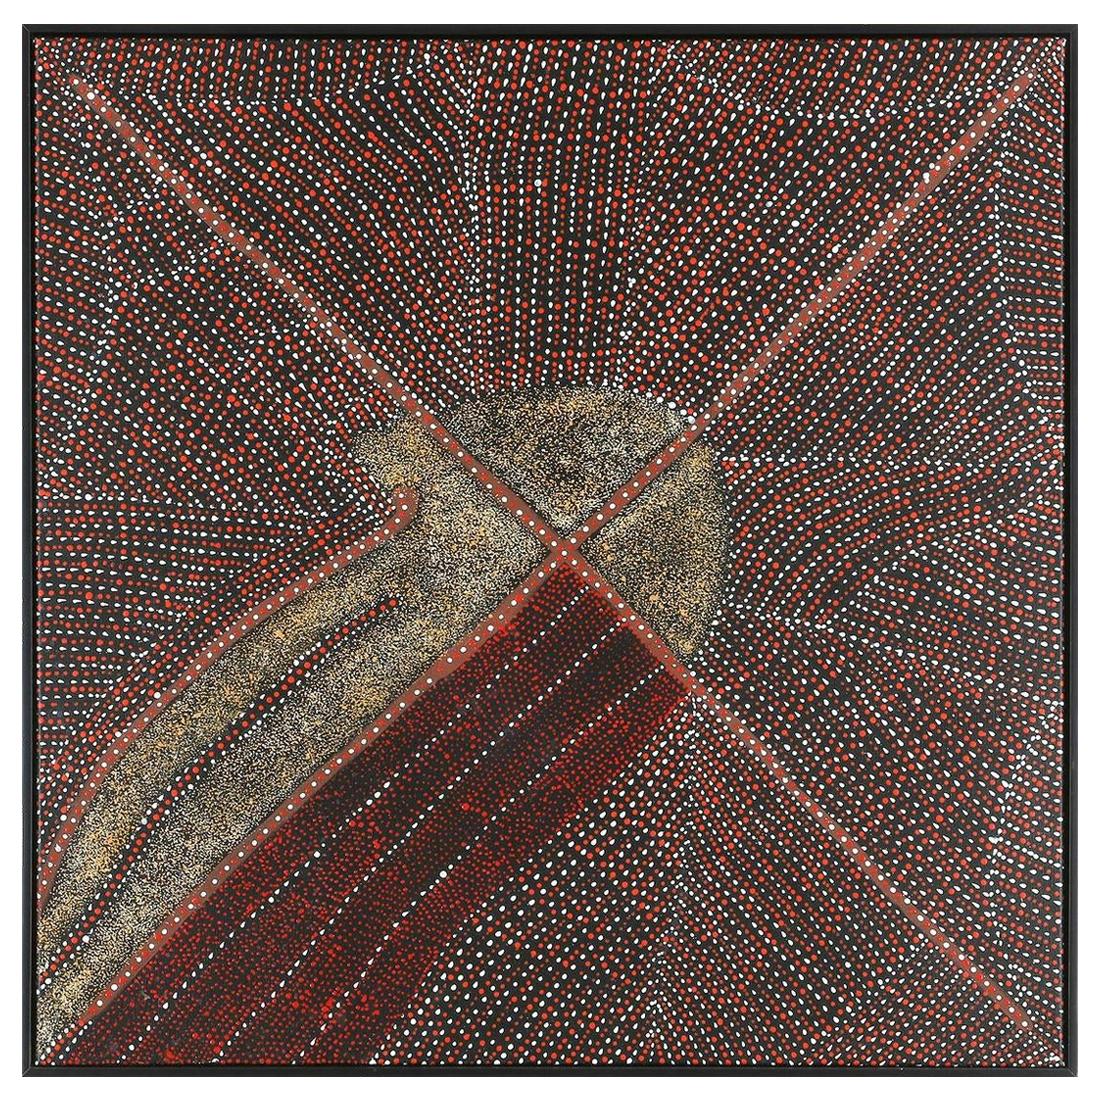 Australian Aboriginal Painting by Kathleen Petyarre